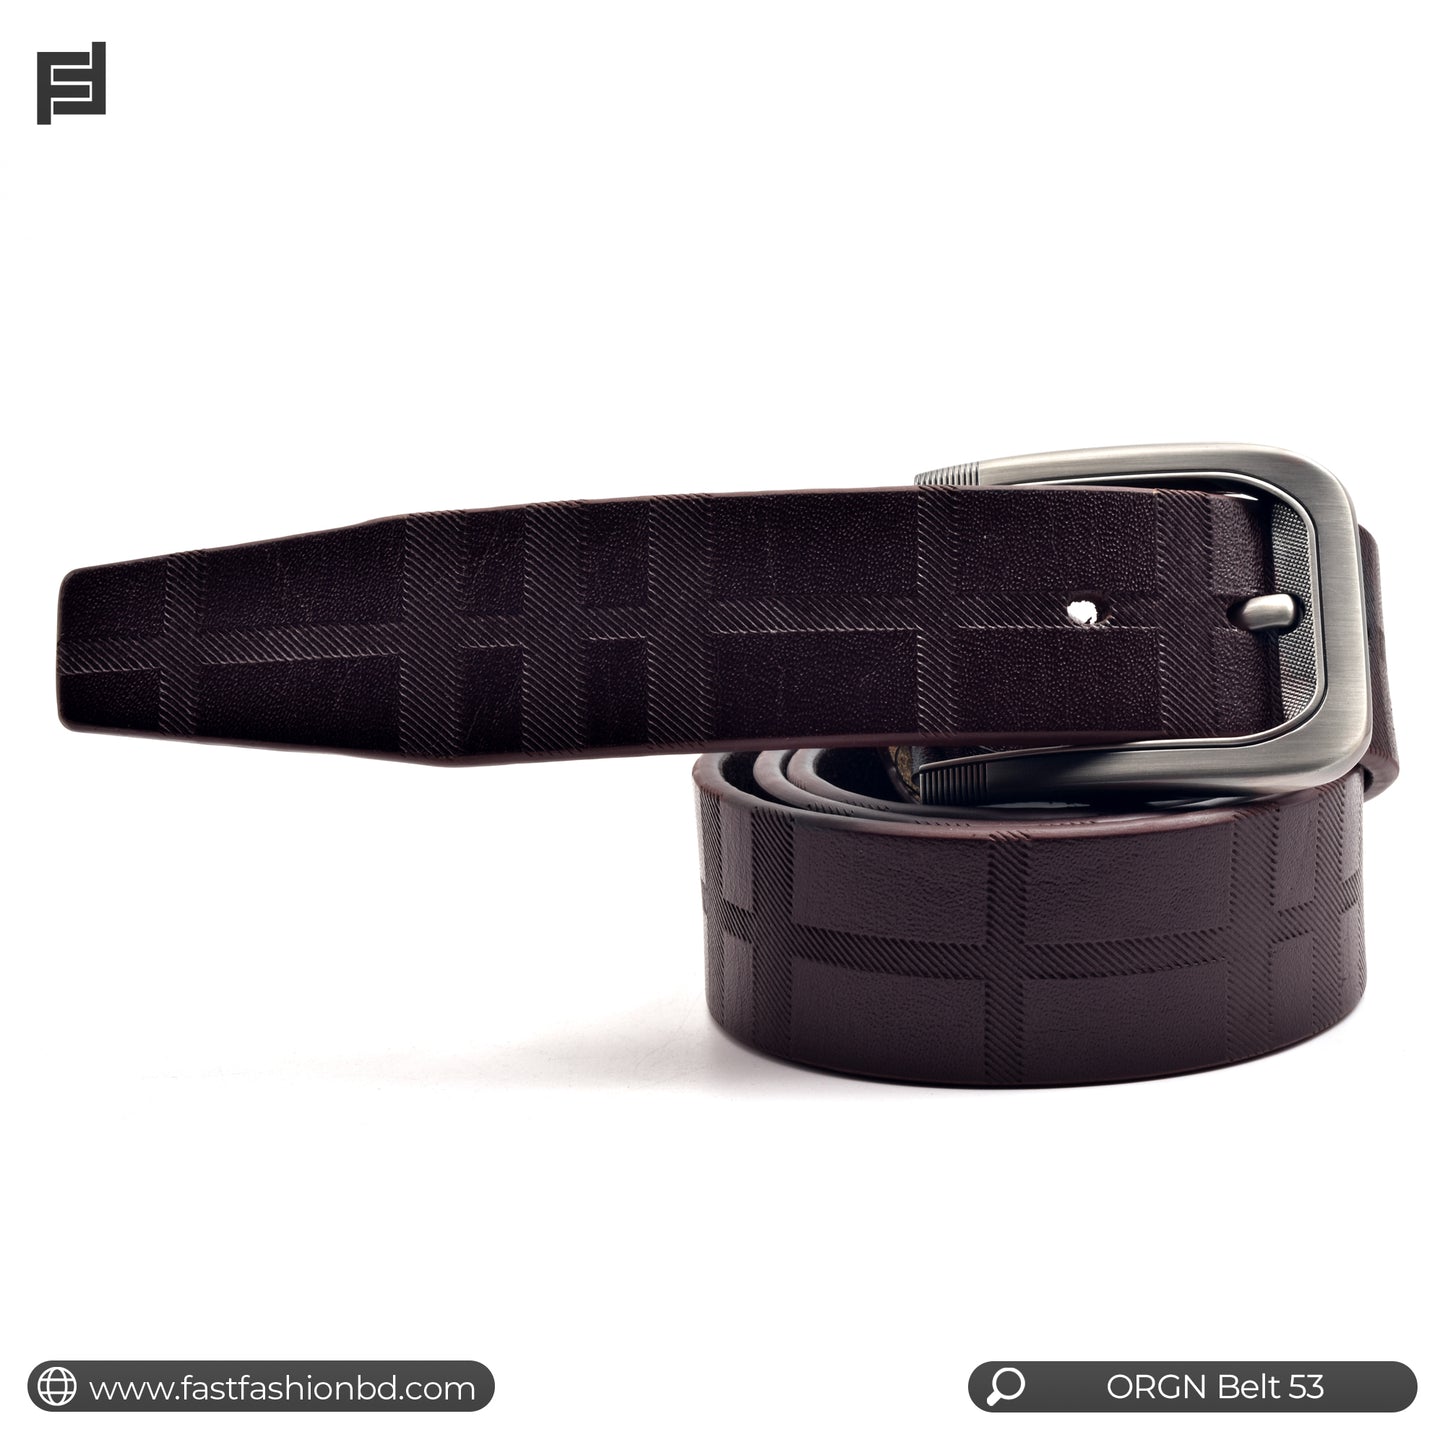 Premium Quality Original Leather Belt - ORGN Belt 53